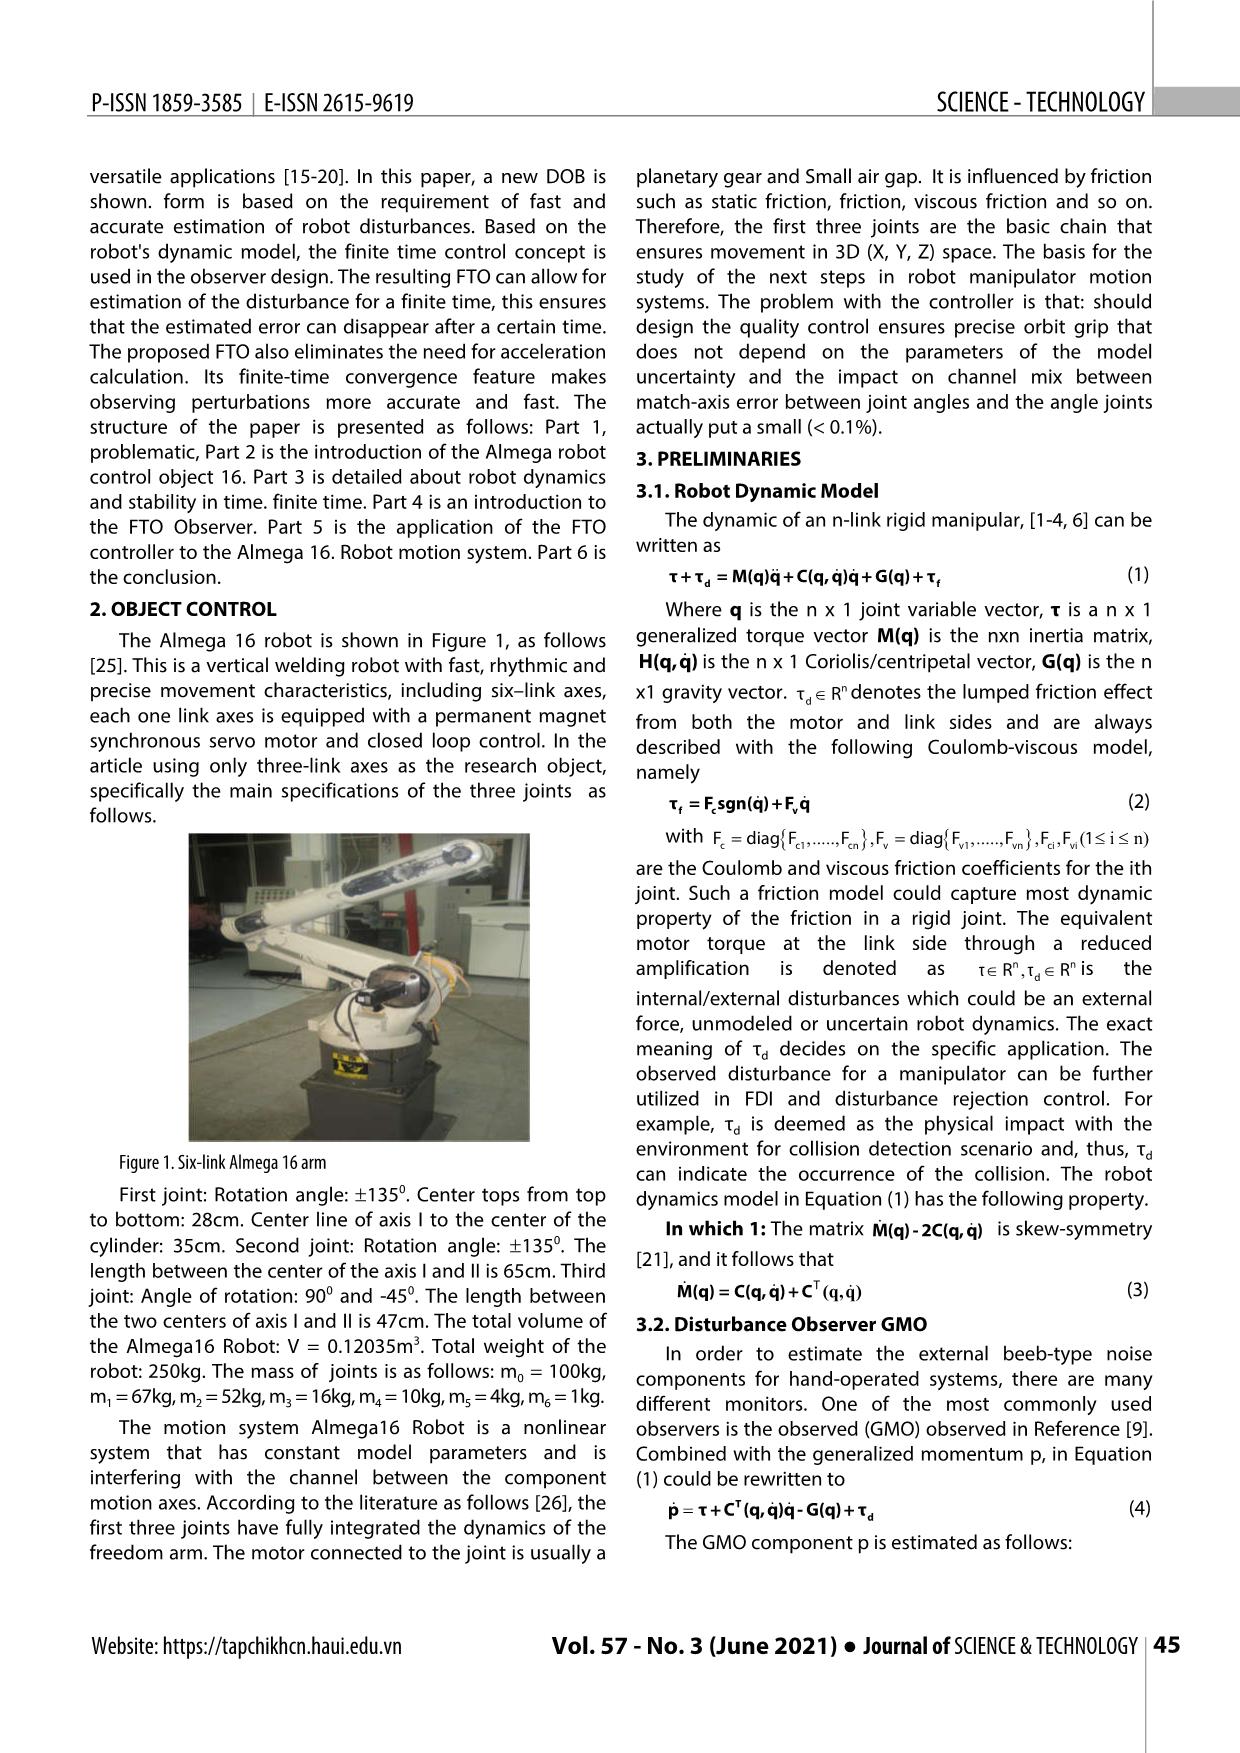 Using the finite - time disturbance observer (FTO) for robotic manipulator Almega 16 trang 2